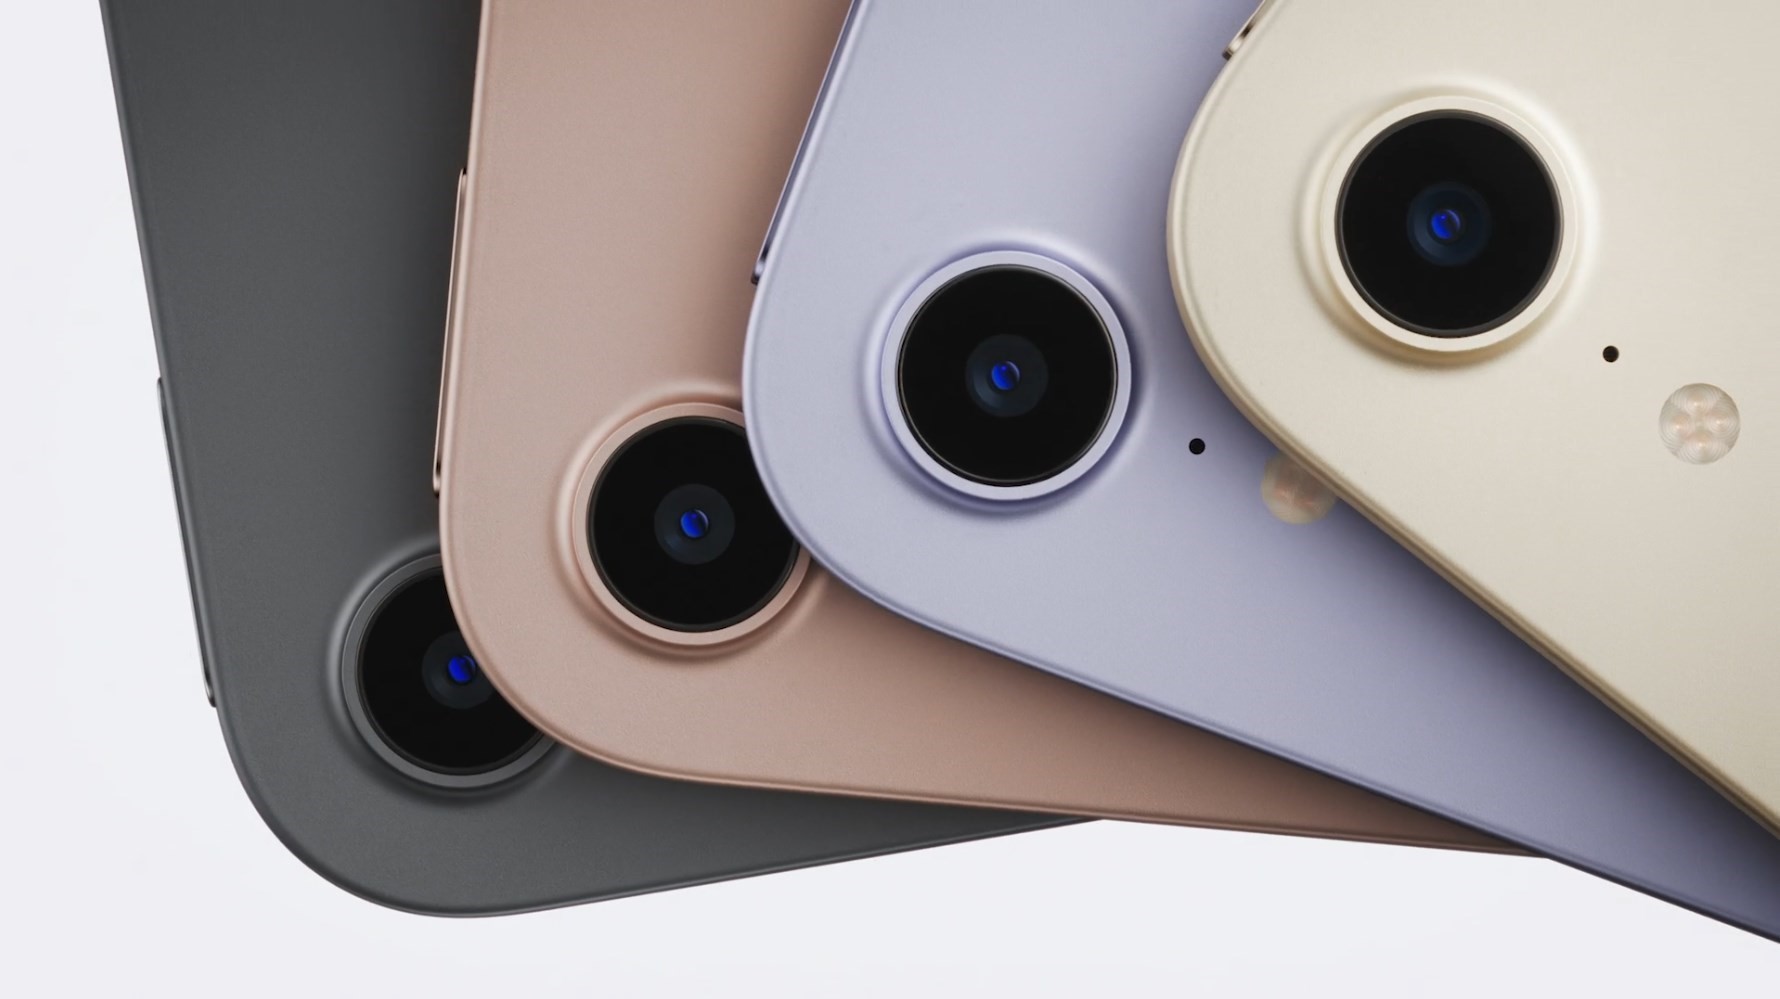 Apple ra mắt iPhone 13 giá 799 USD, iPhone 13 Pro giá 999 USD